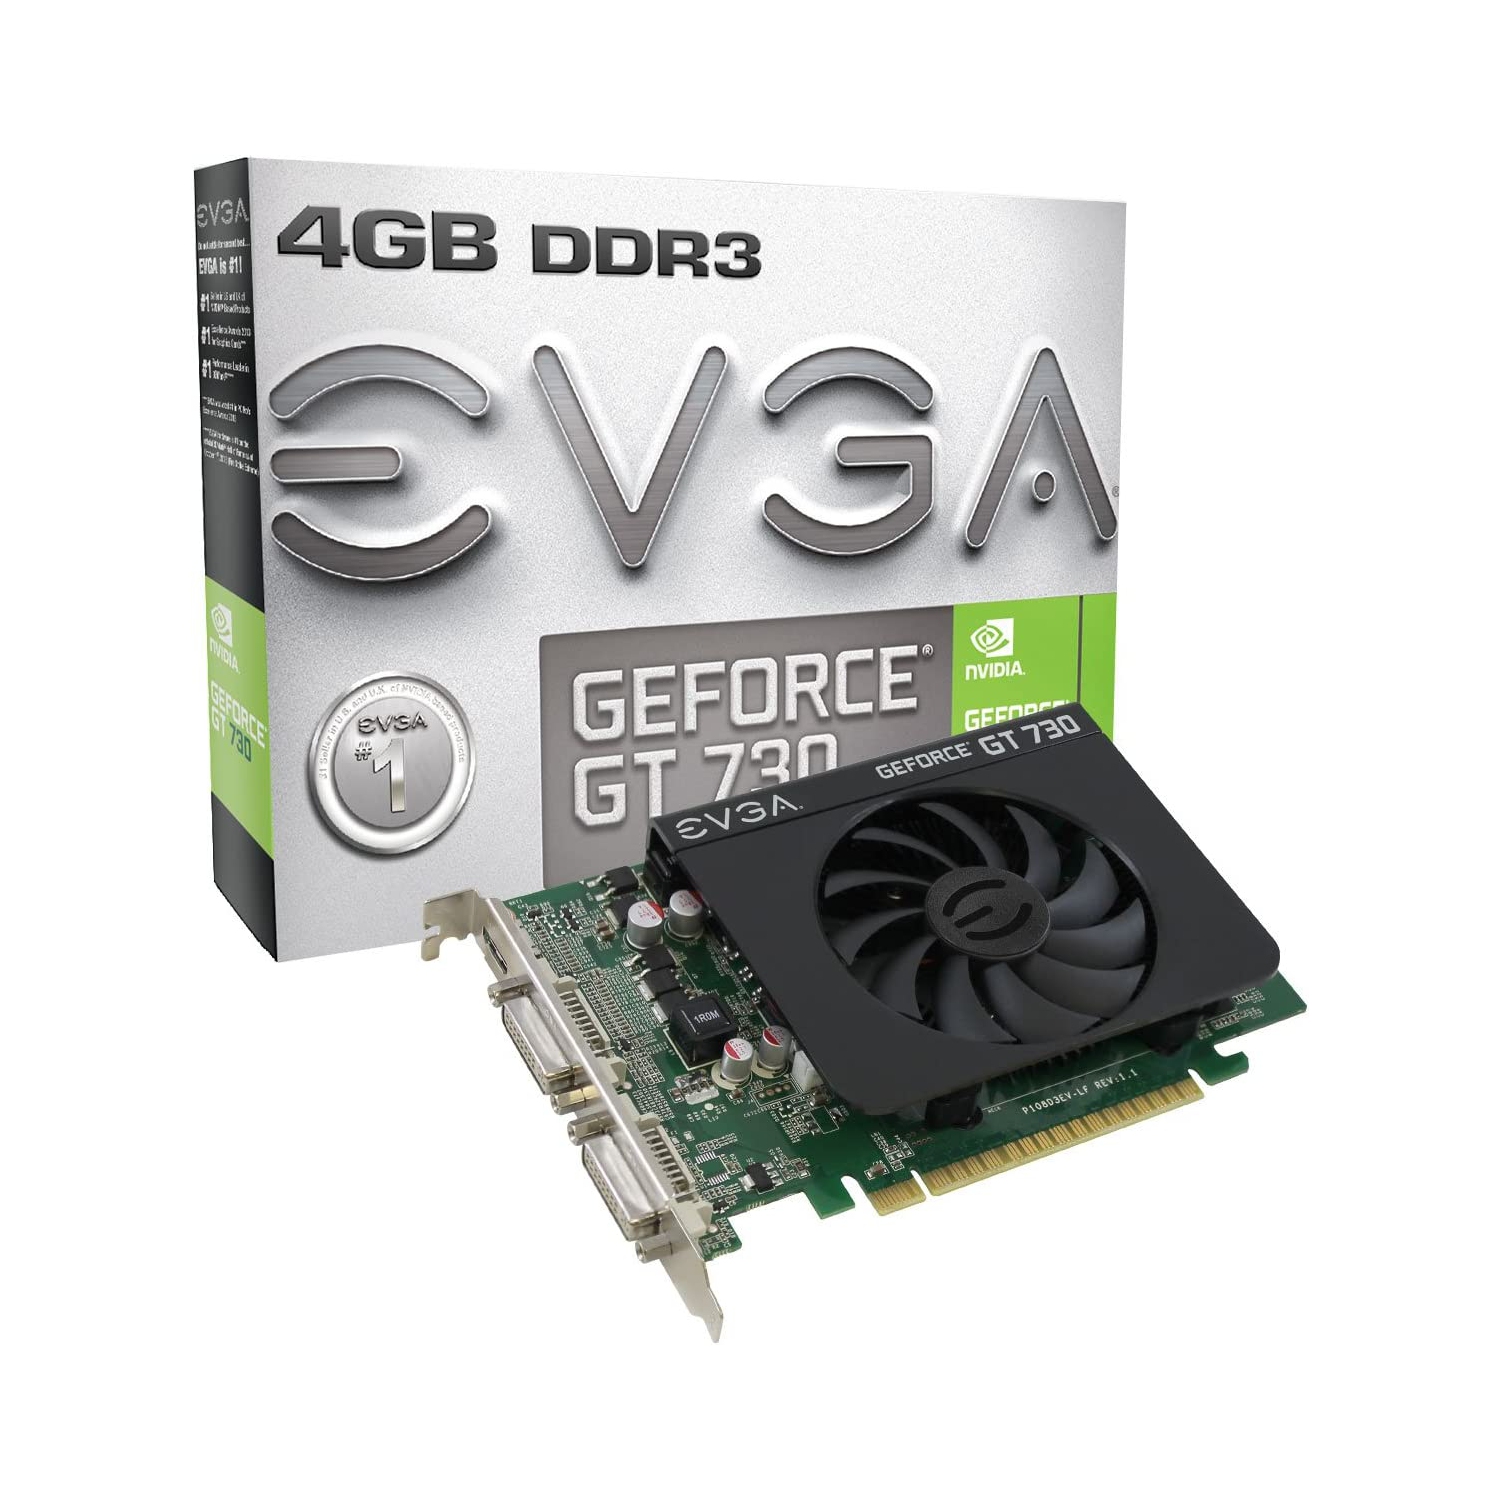 EVGA GeForce GT 730 Graphic Card - 700MHz Core - 4GB DDR3 SDRAM - PCI Express 2.0 x16